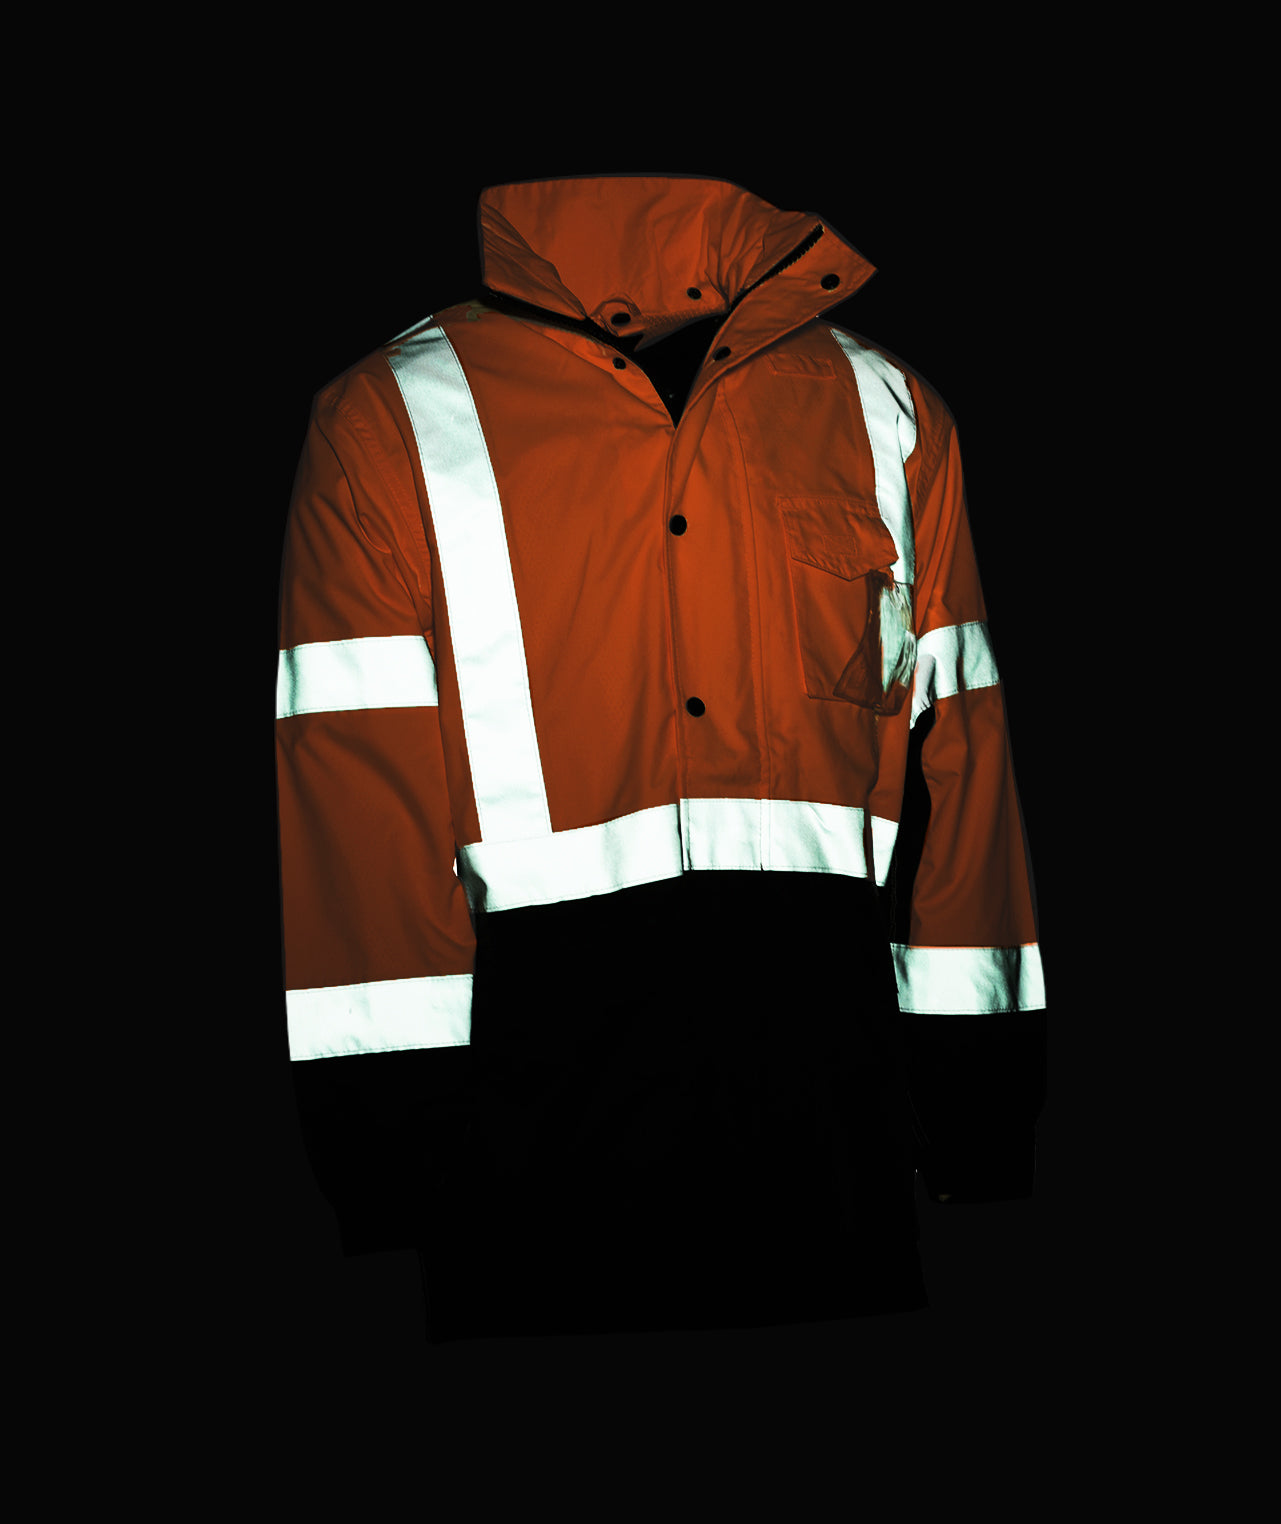 Men's ANSI Class 3 High Visibility Bomber Safety Jacket, Waterproof -  Orange / Medium 